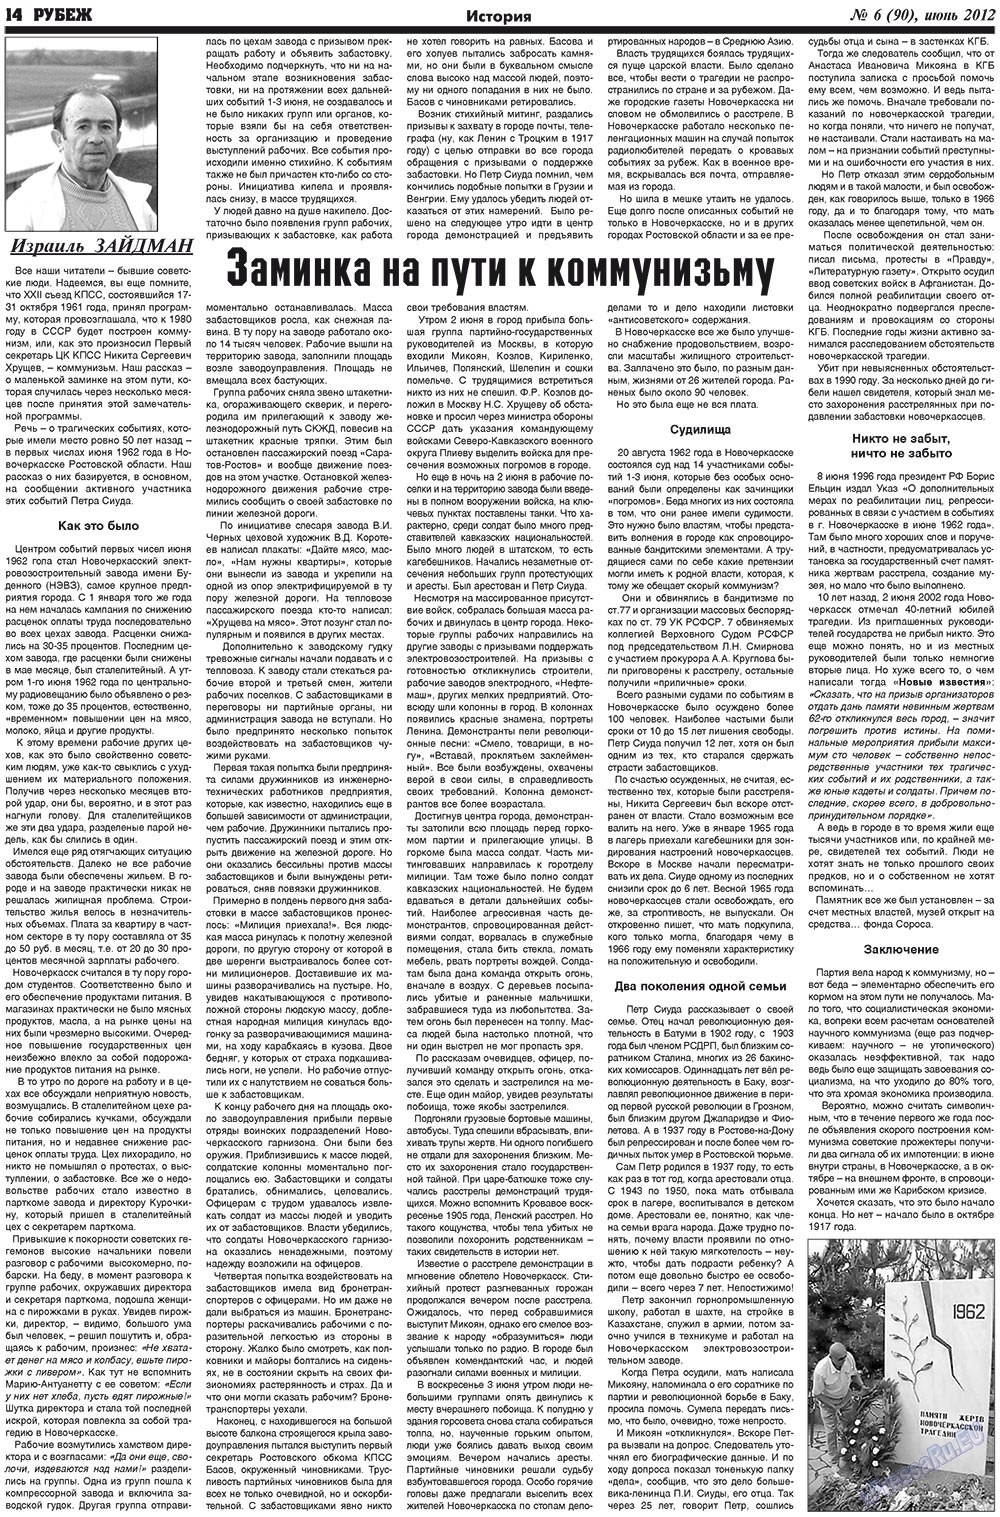 Рубеж, газета. 2012 №6 стр.14